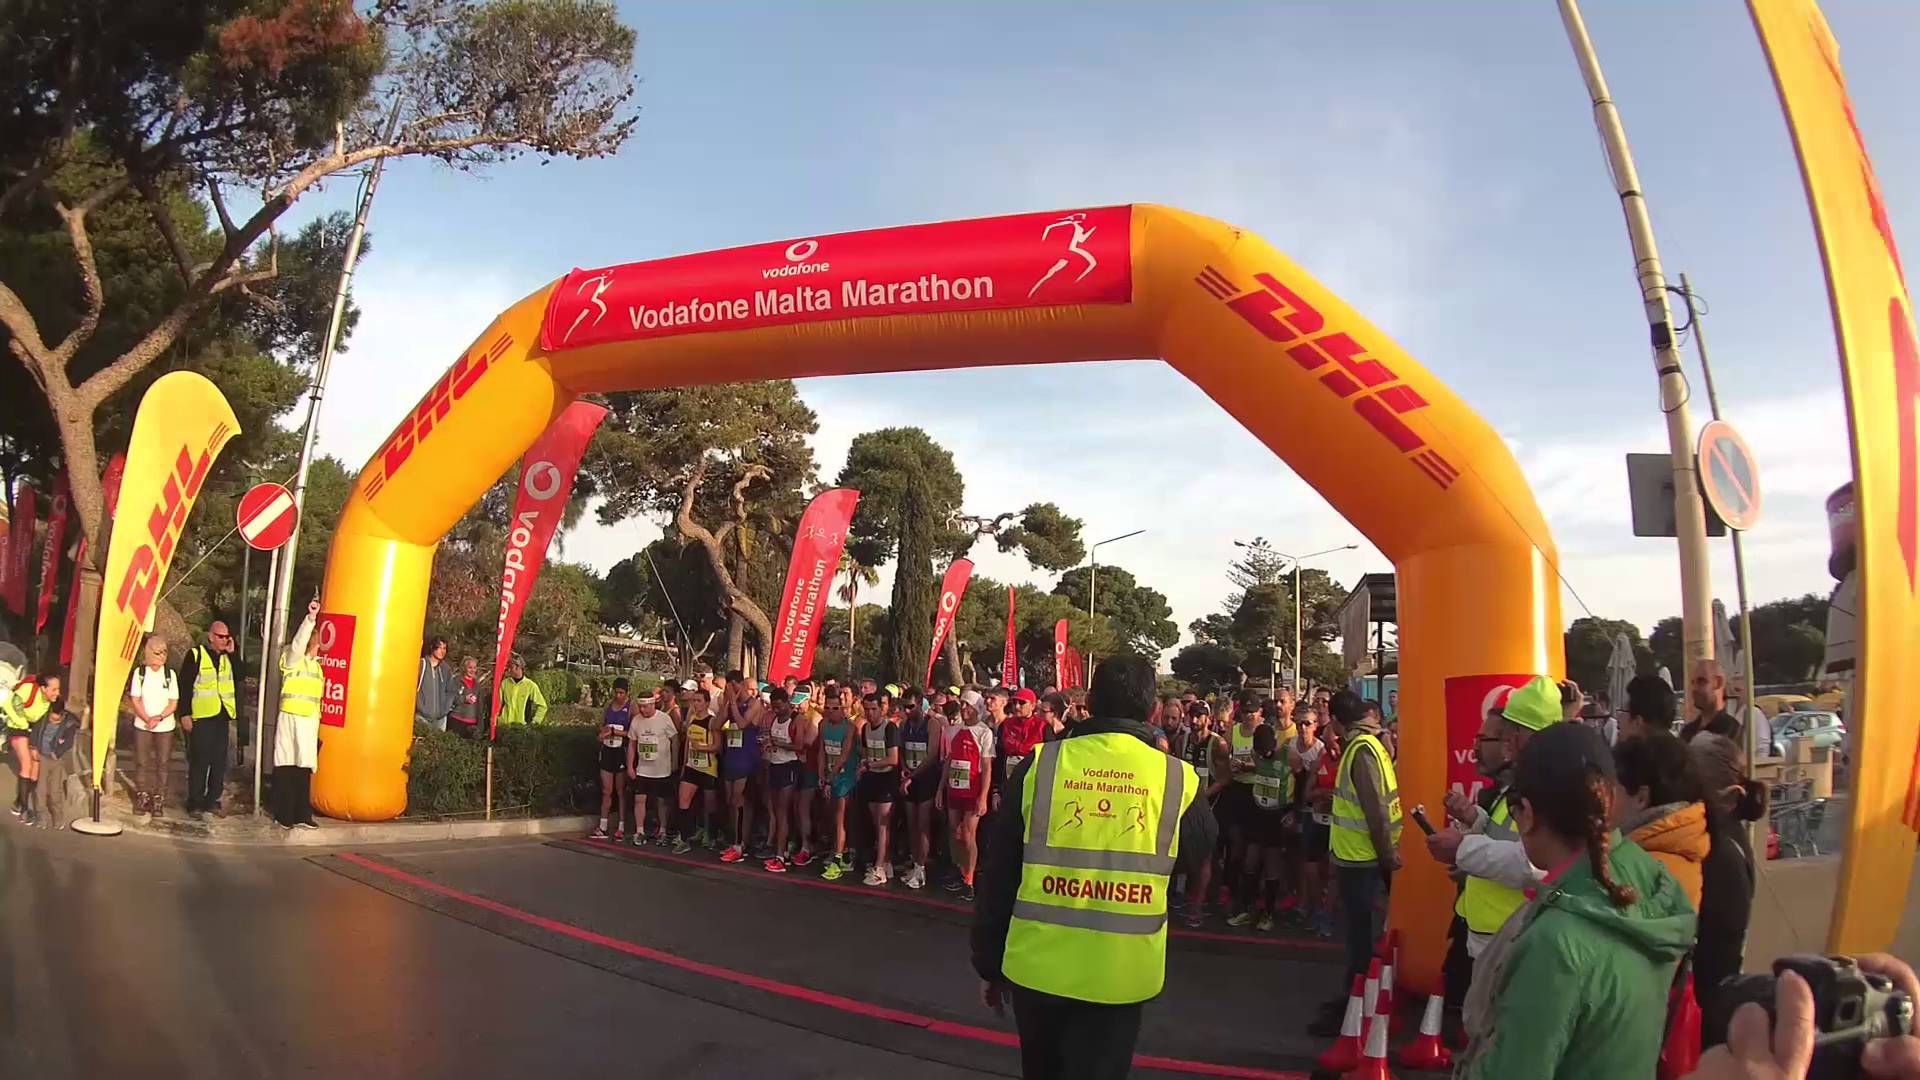 Vodafone Malta Marathon 2016 - ACTIVE TRAVELING